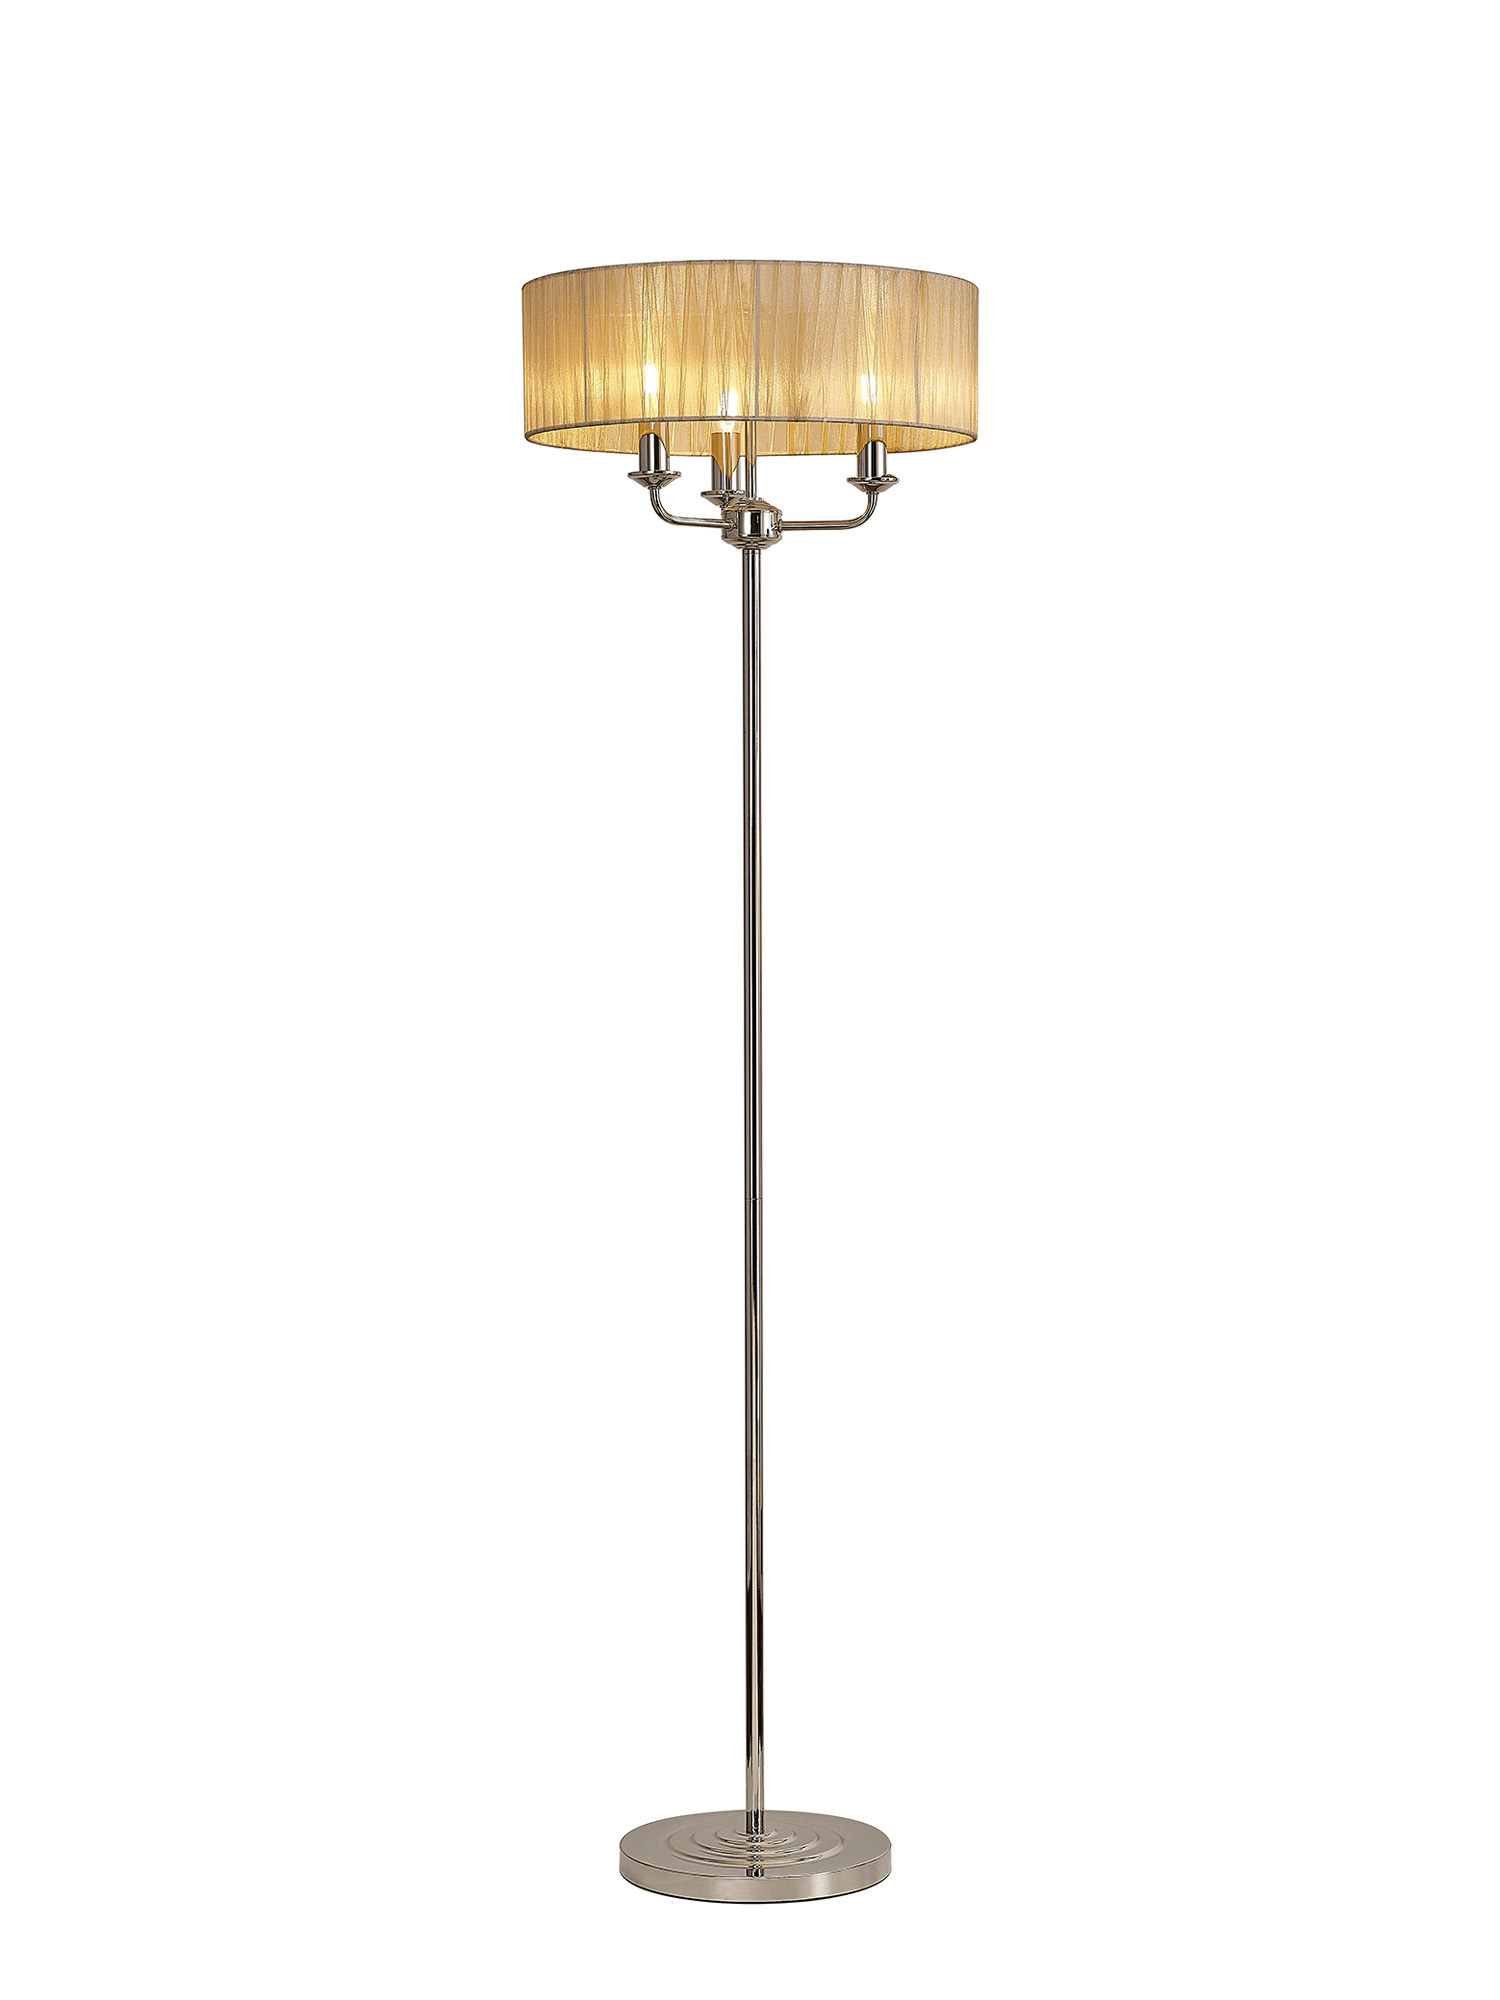 DK0889  Banyan 45cm 3 Light Floor Lamp Polished Nickel, Soft Bronze